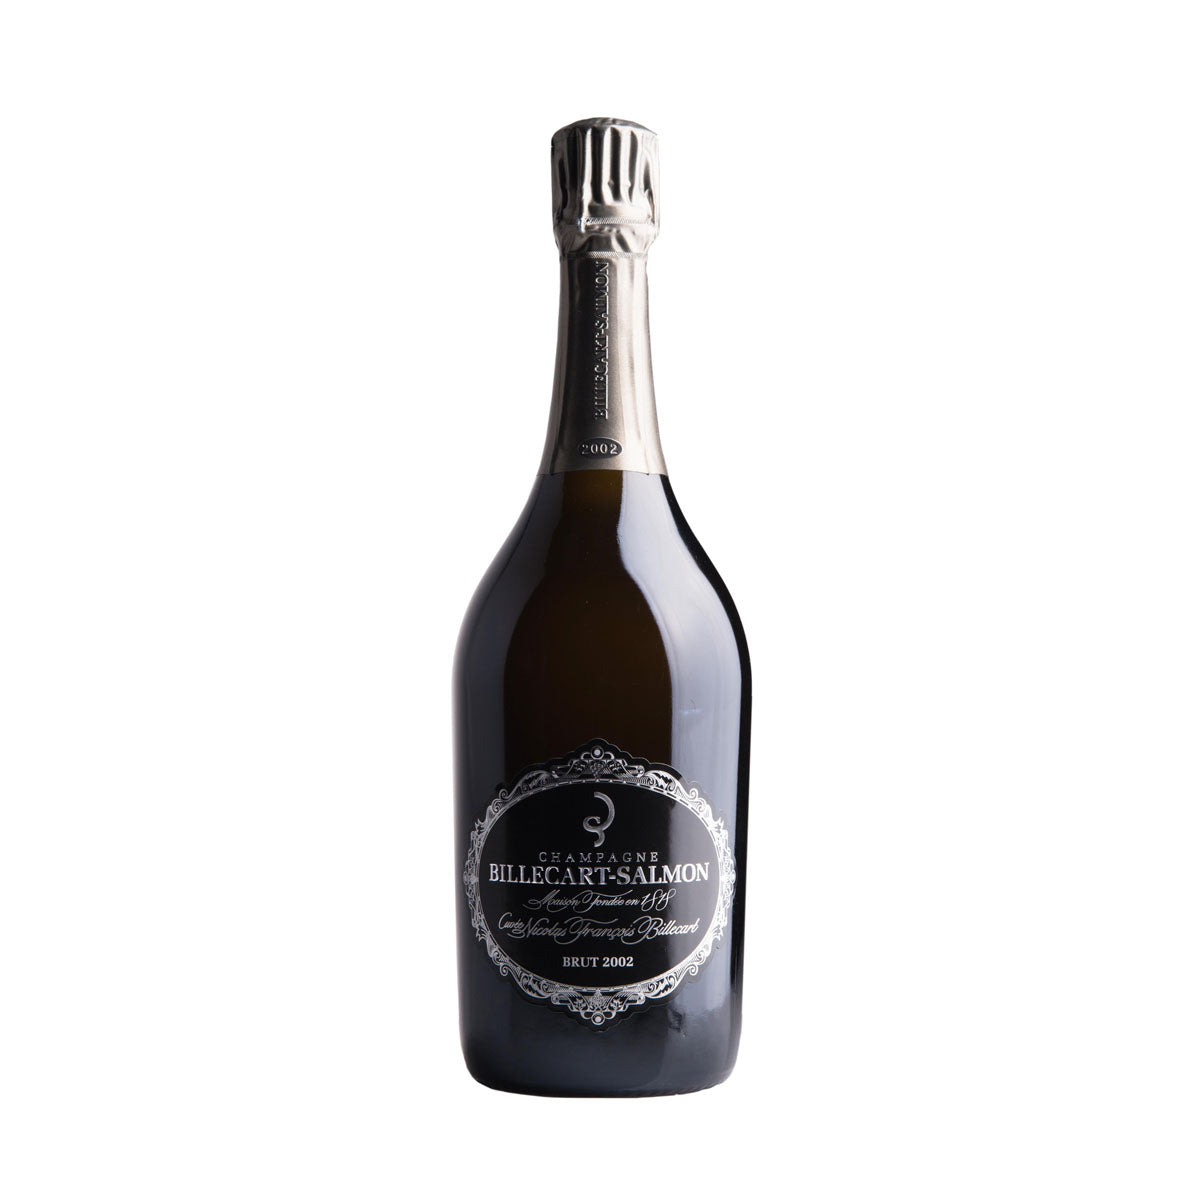 Champagne Billecart-Salmon 'Nicolas Francoise Billecart' Brut 2002